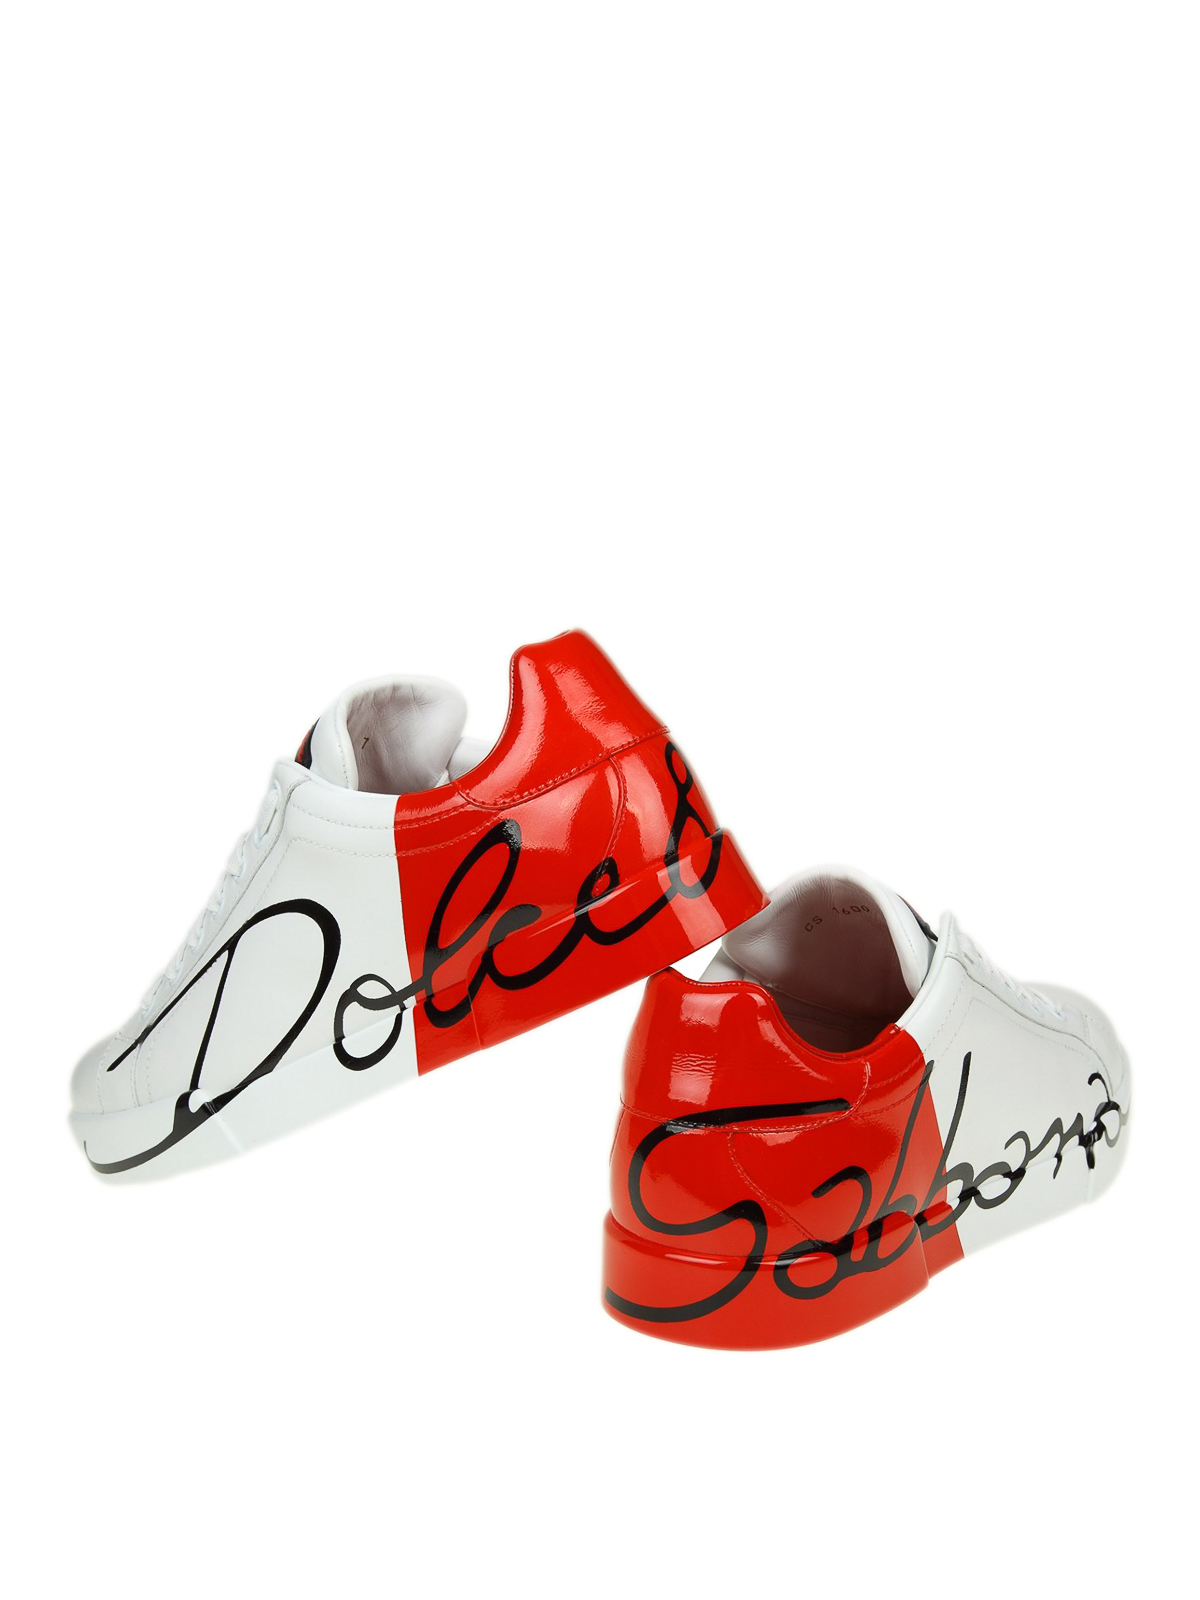 Svarende til Australsk person Værdiløs Trainers Dolce & Gabbana - Portofino white and red leather sneakers -  CS1600AI053HR821